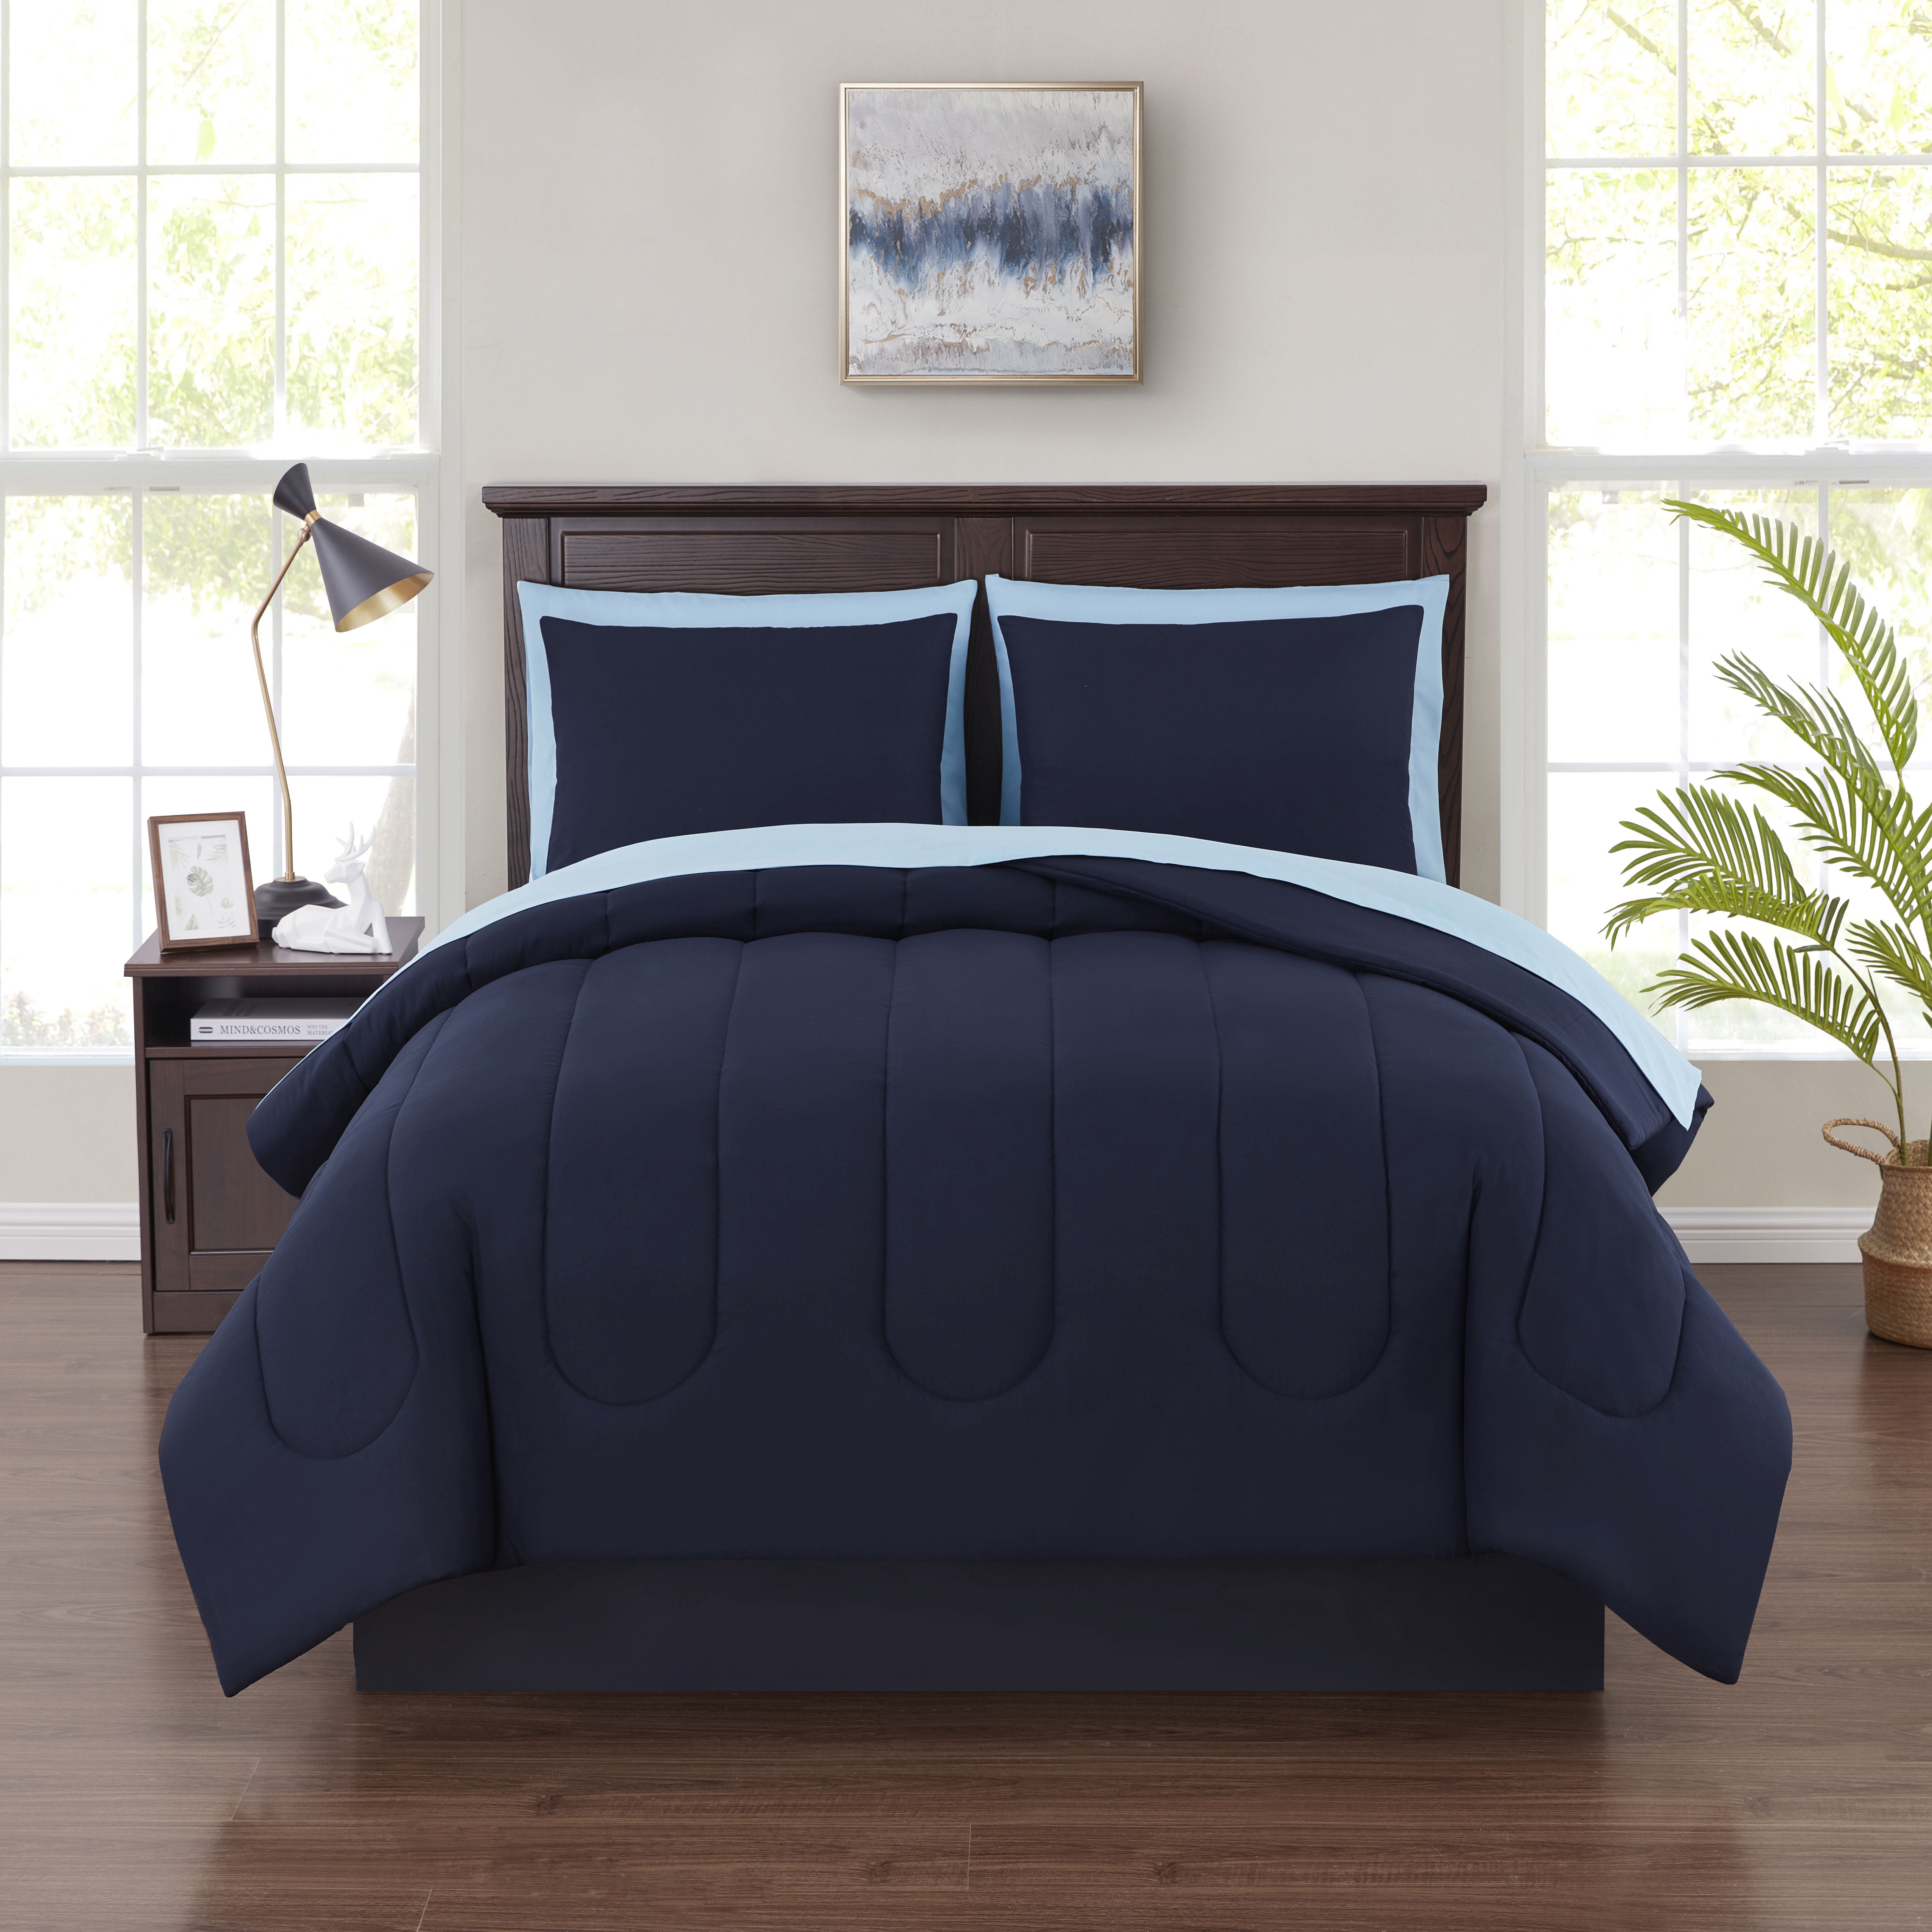 8pc Navy Blue Duvet Cover & Bedroom Comforter AND Microfiber Sheet Set 